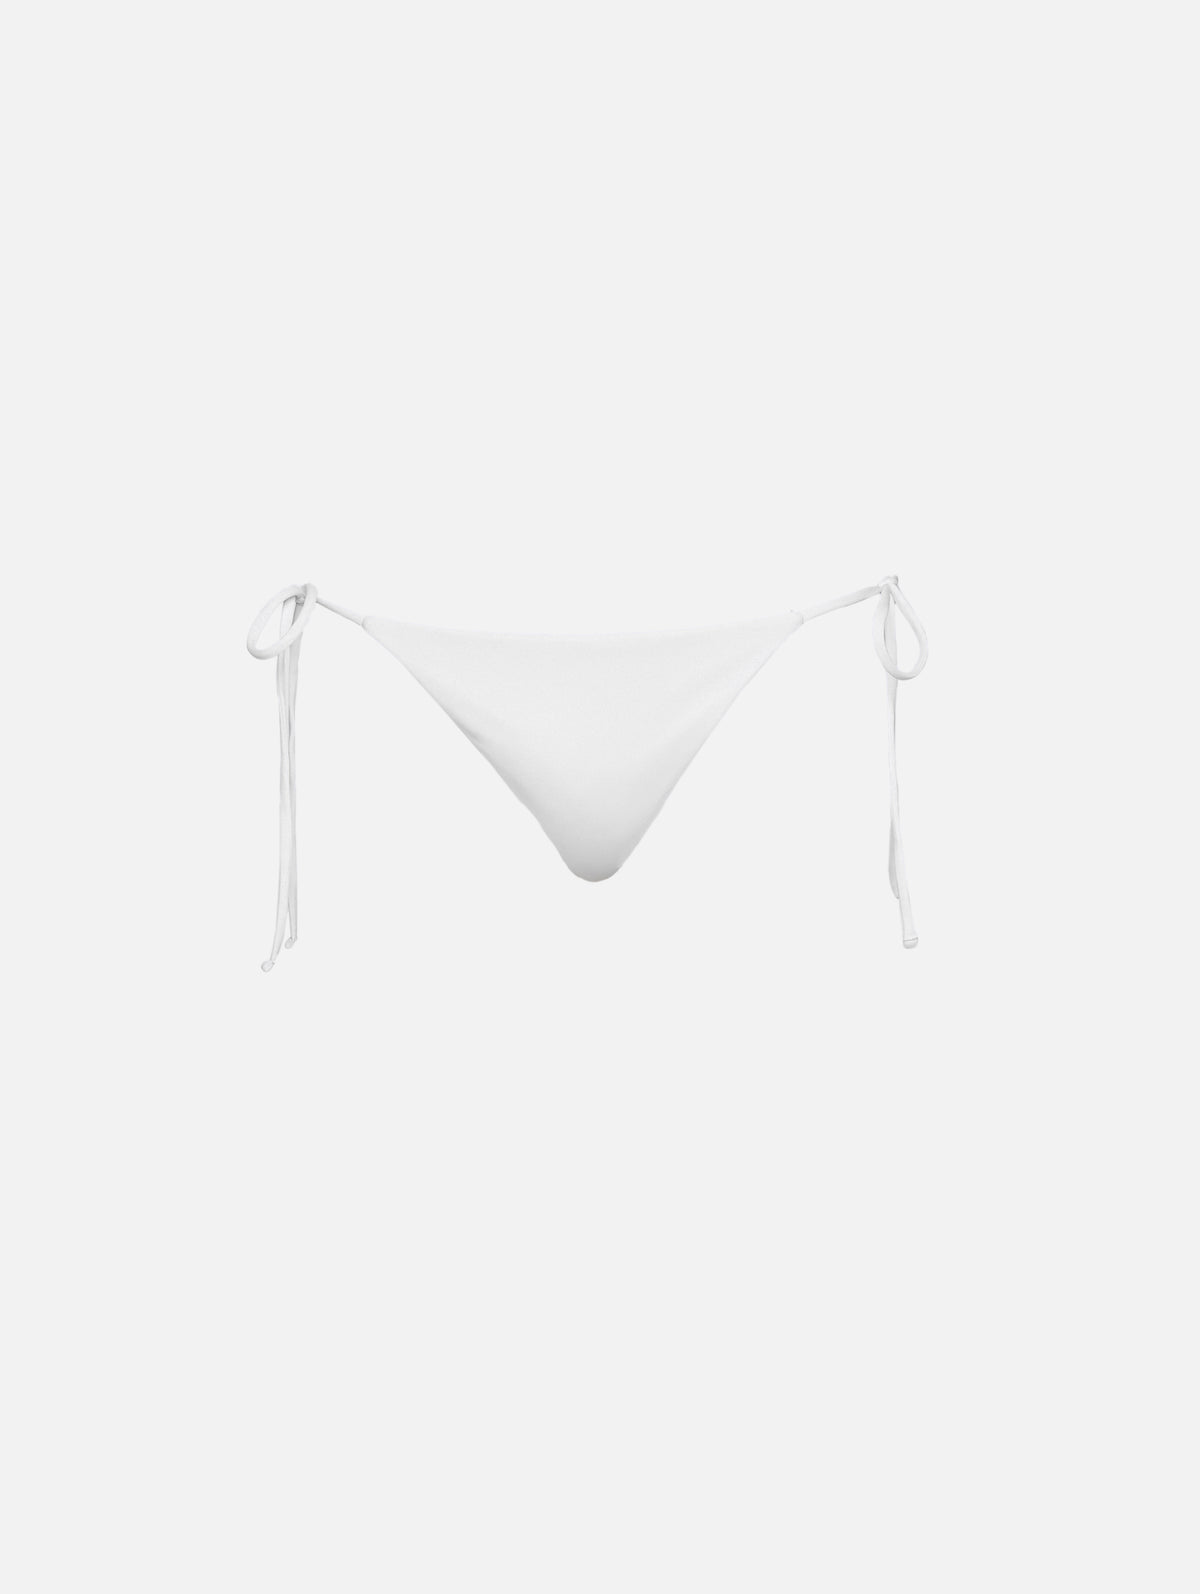 Allyors - Zipper - Bikini Bottom - White, Yorstruly